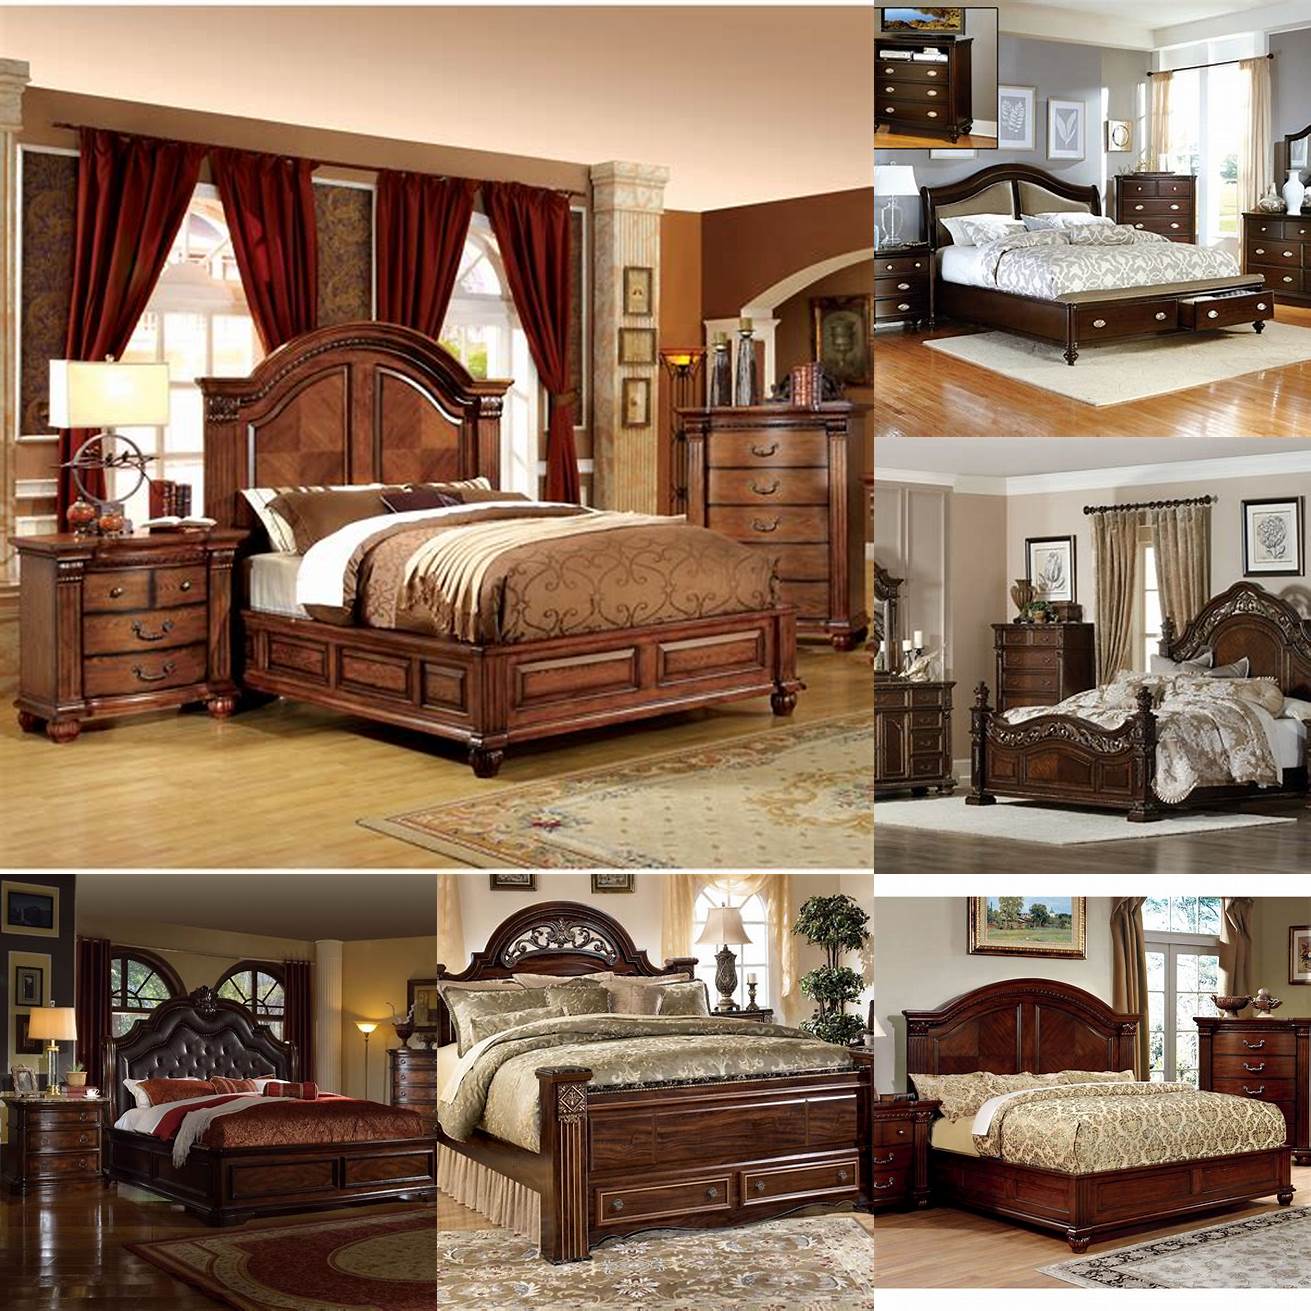 Traditional full size bedroom furniture set